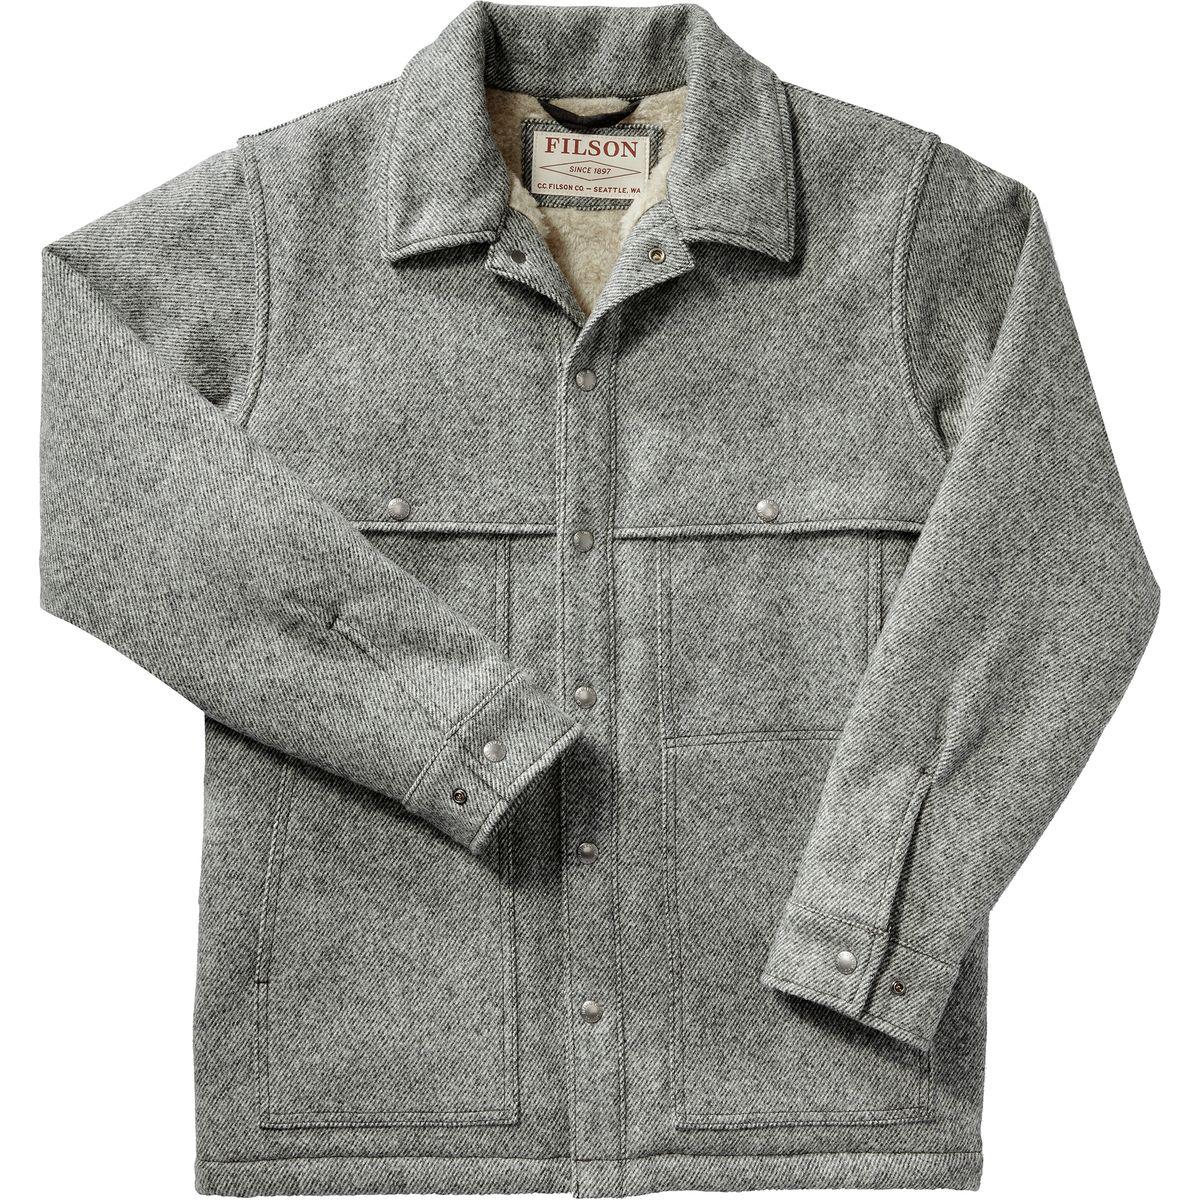 Lyst - Filson Lined Wool Cape Coat in Gray for Men